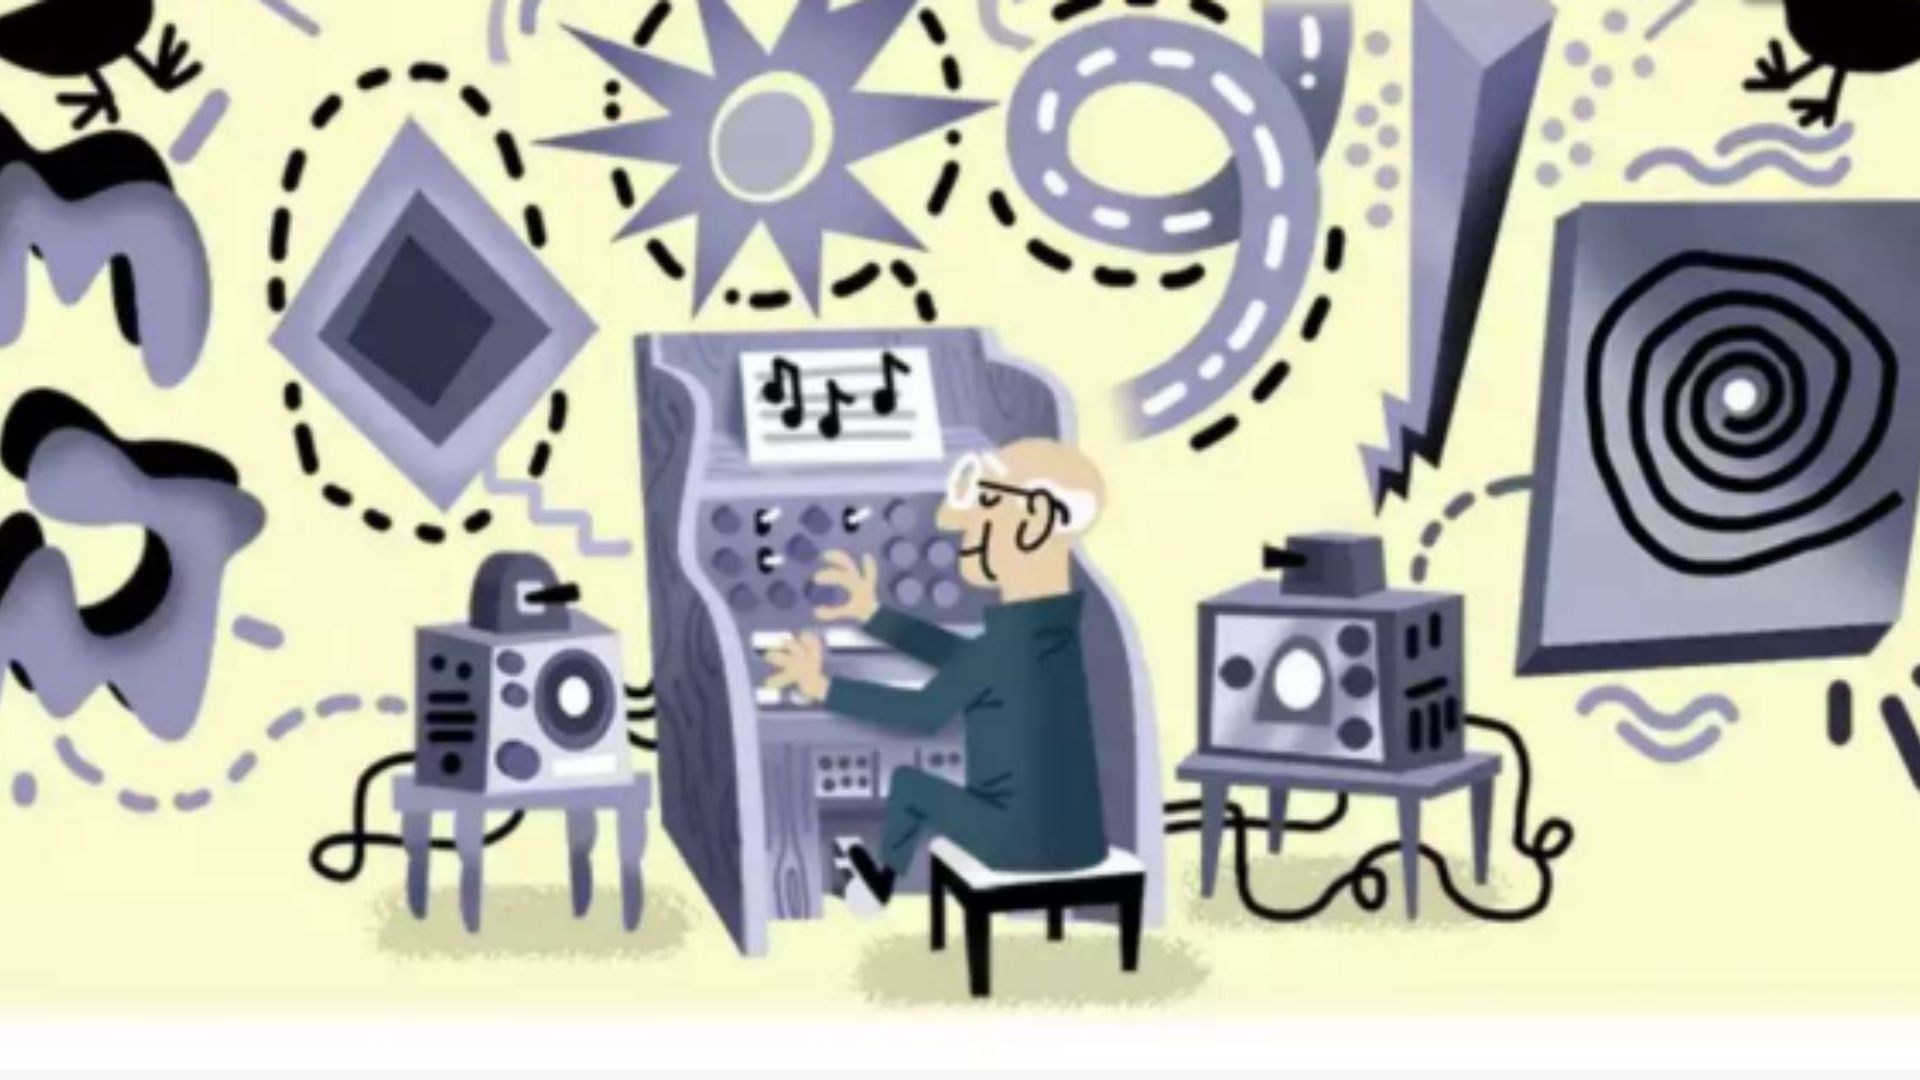 Google Doodle today celebrates the 112th birthday of Oskar Sala